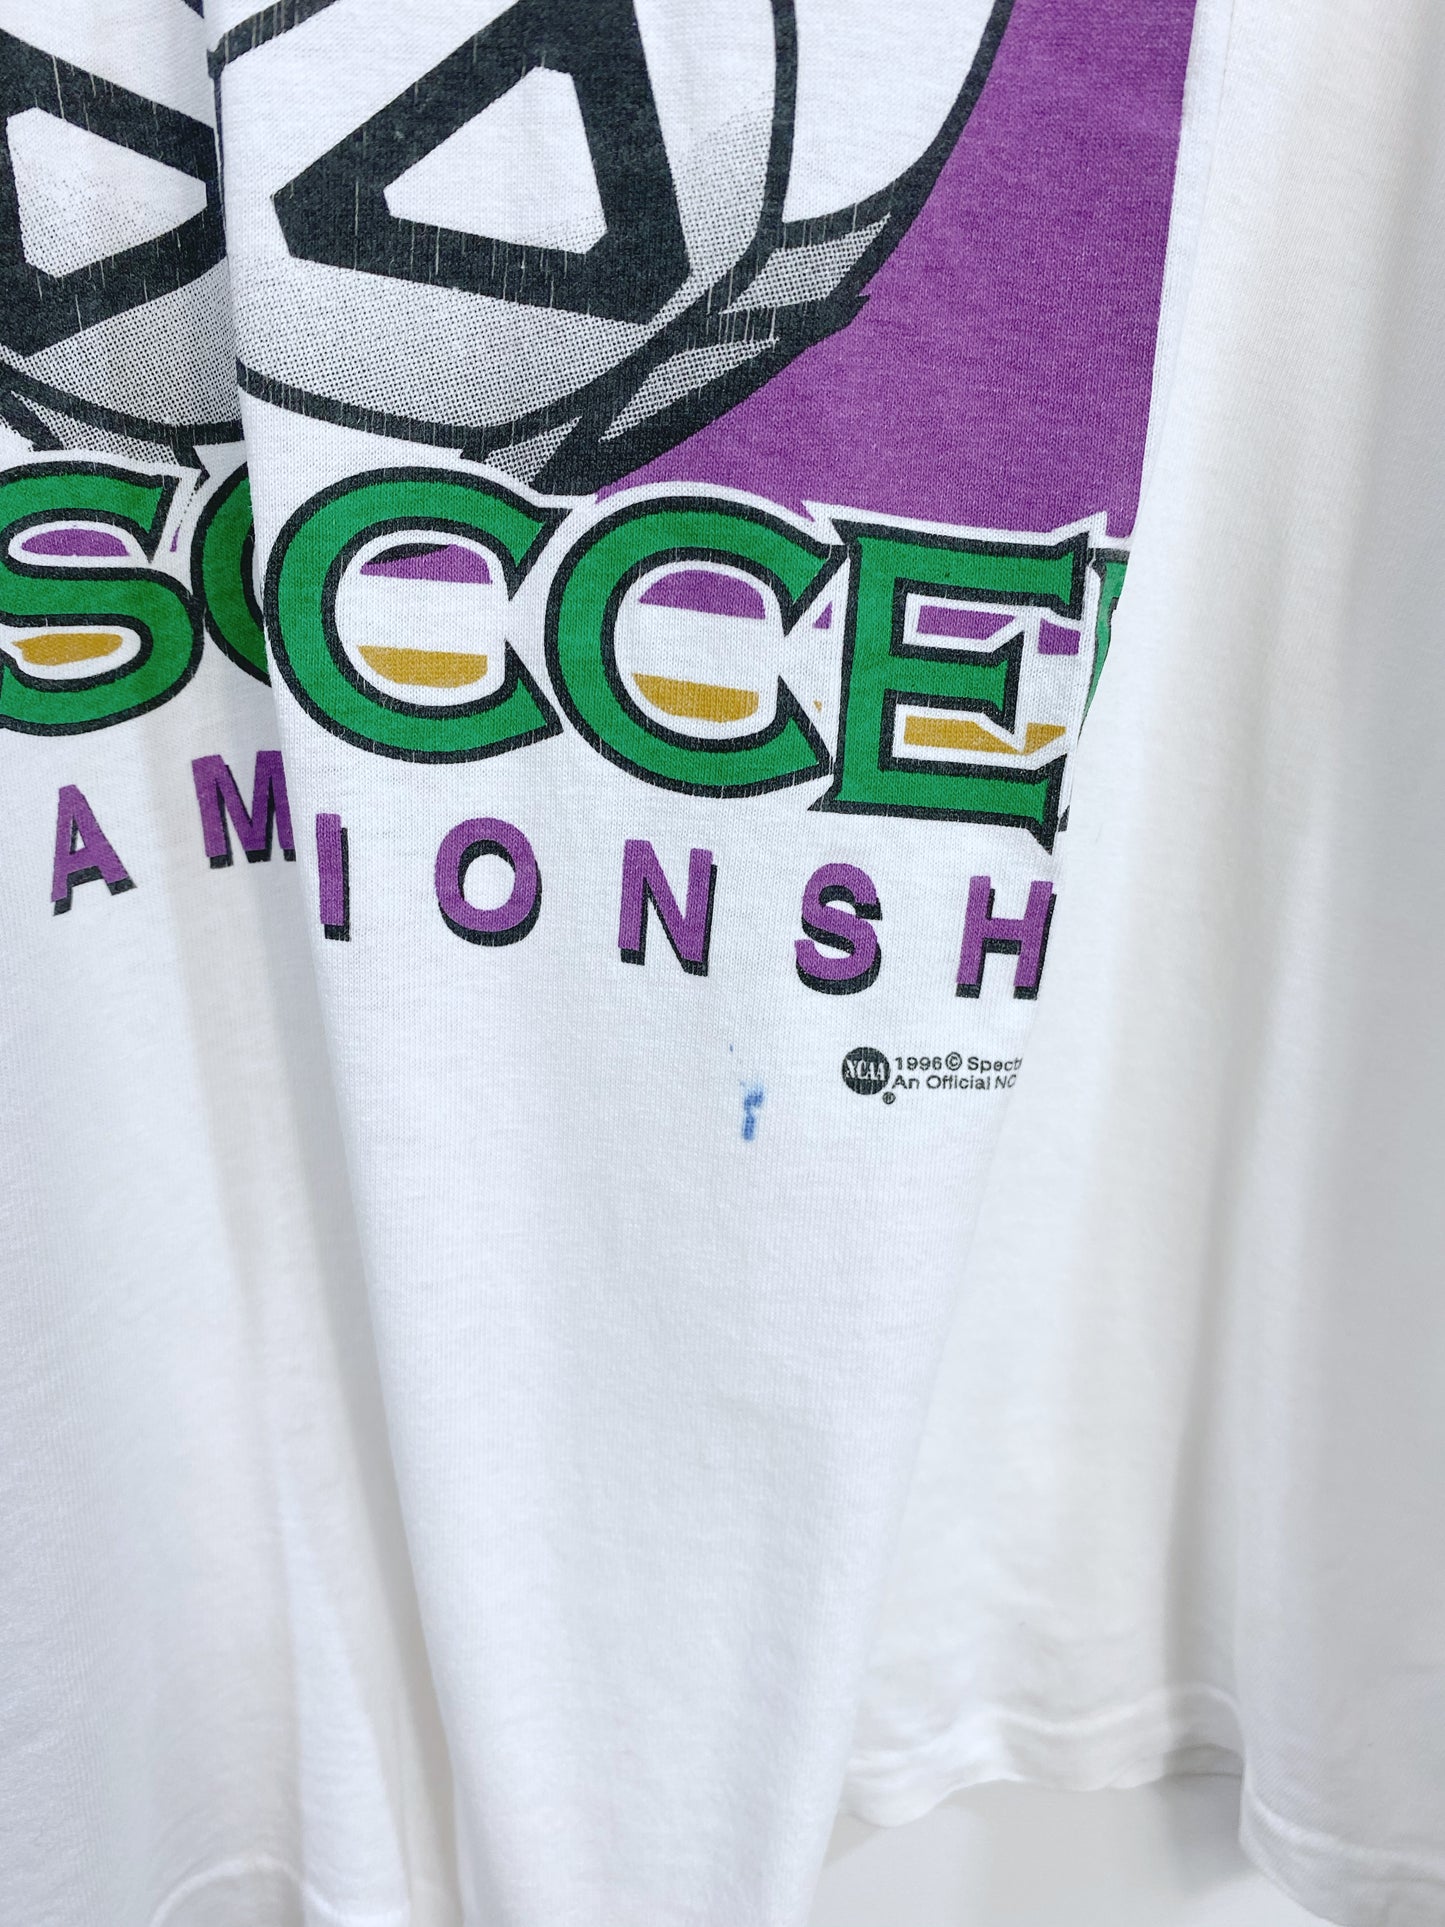 Vintage 1996 Soccer Championship LongSleeve Shirt L